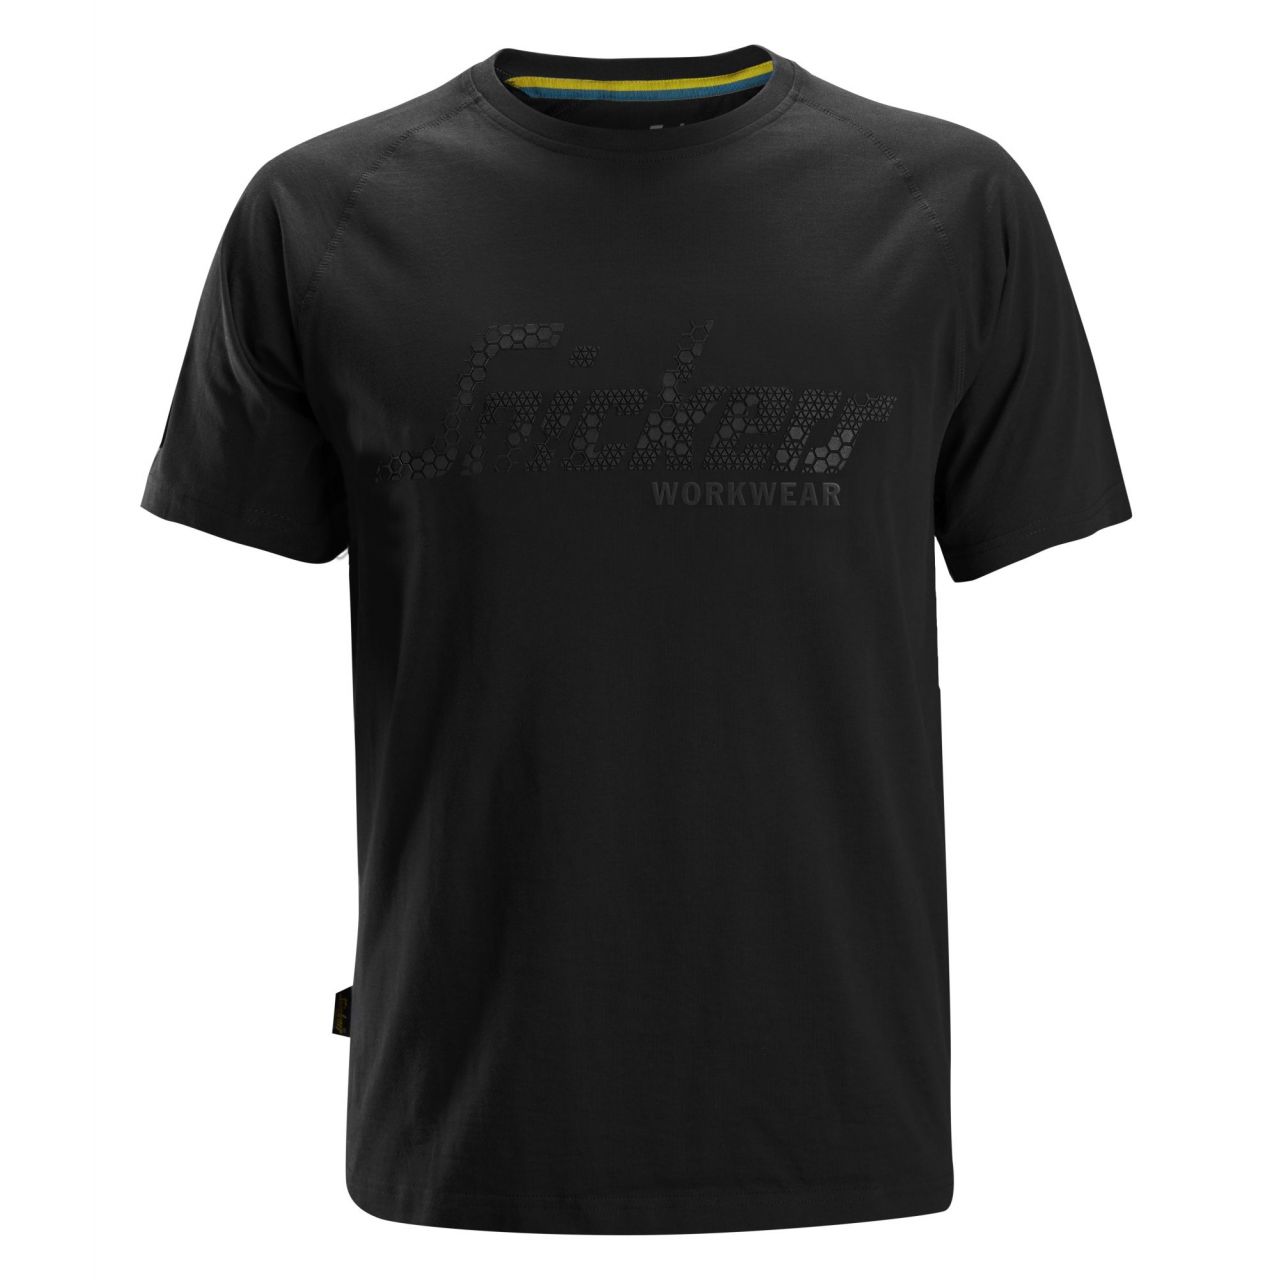 Snickers Workwear Camiseta Logo Negra Talla L